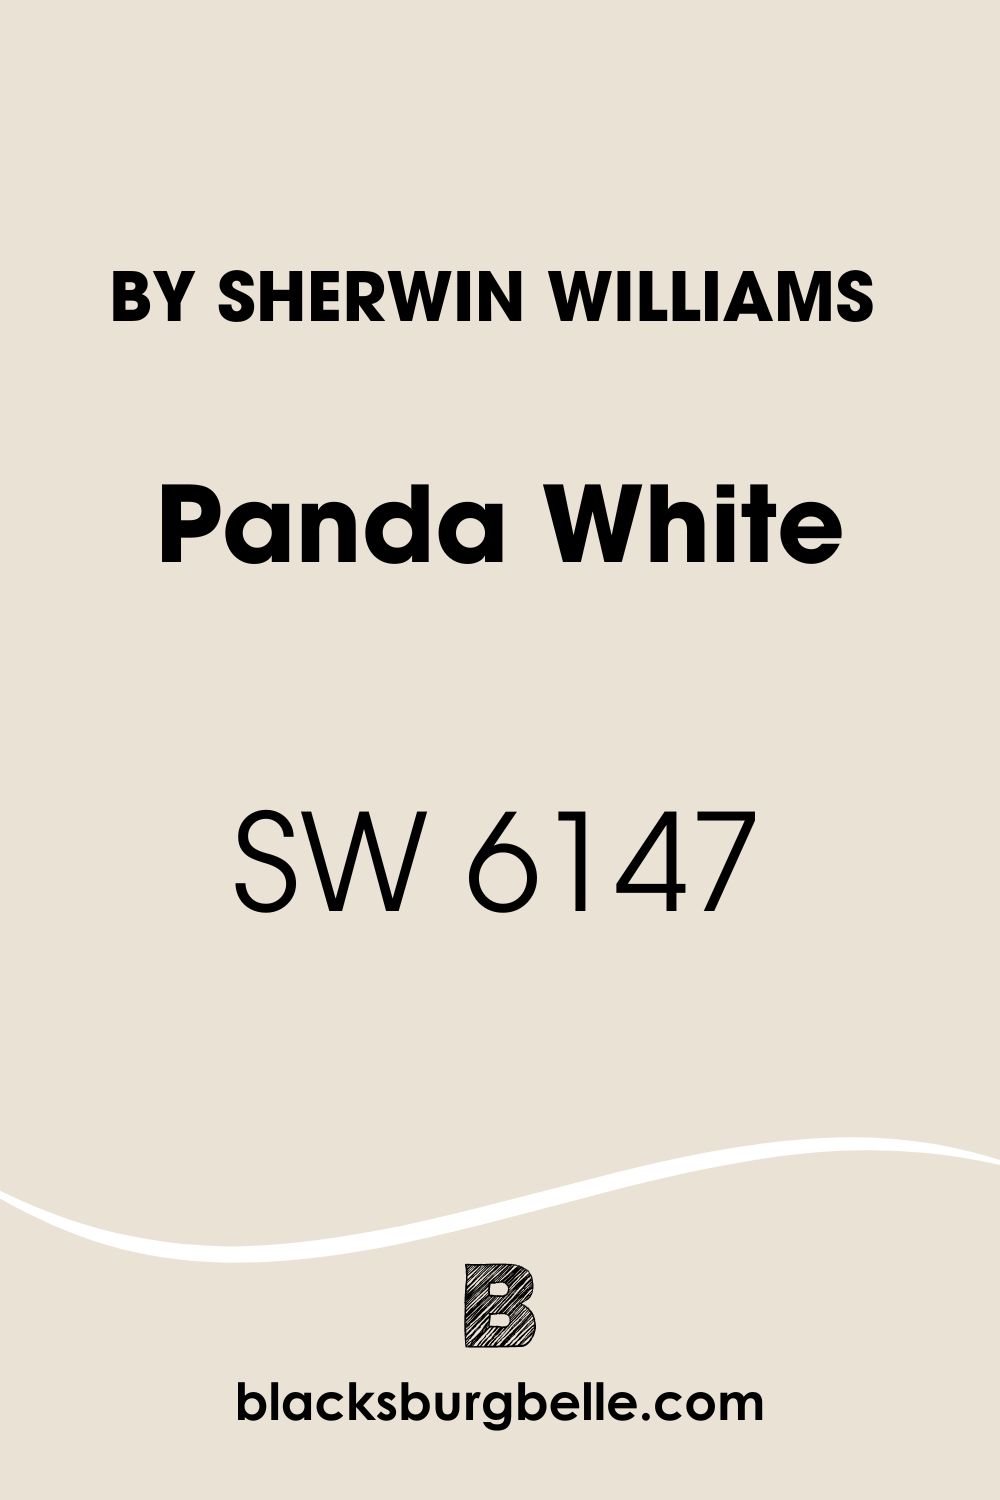 Sherwin Williams Panda White SW 6147